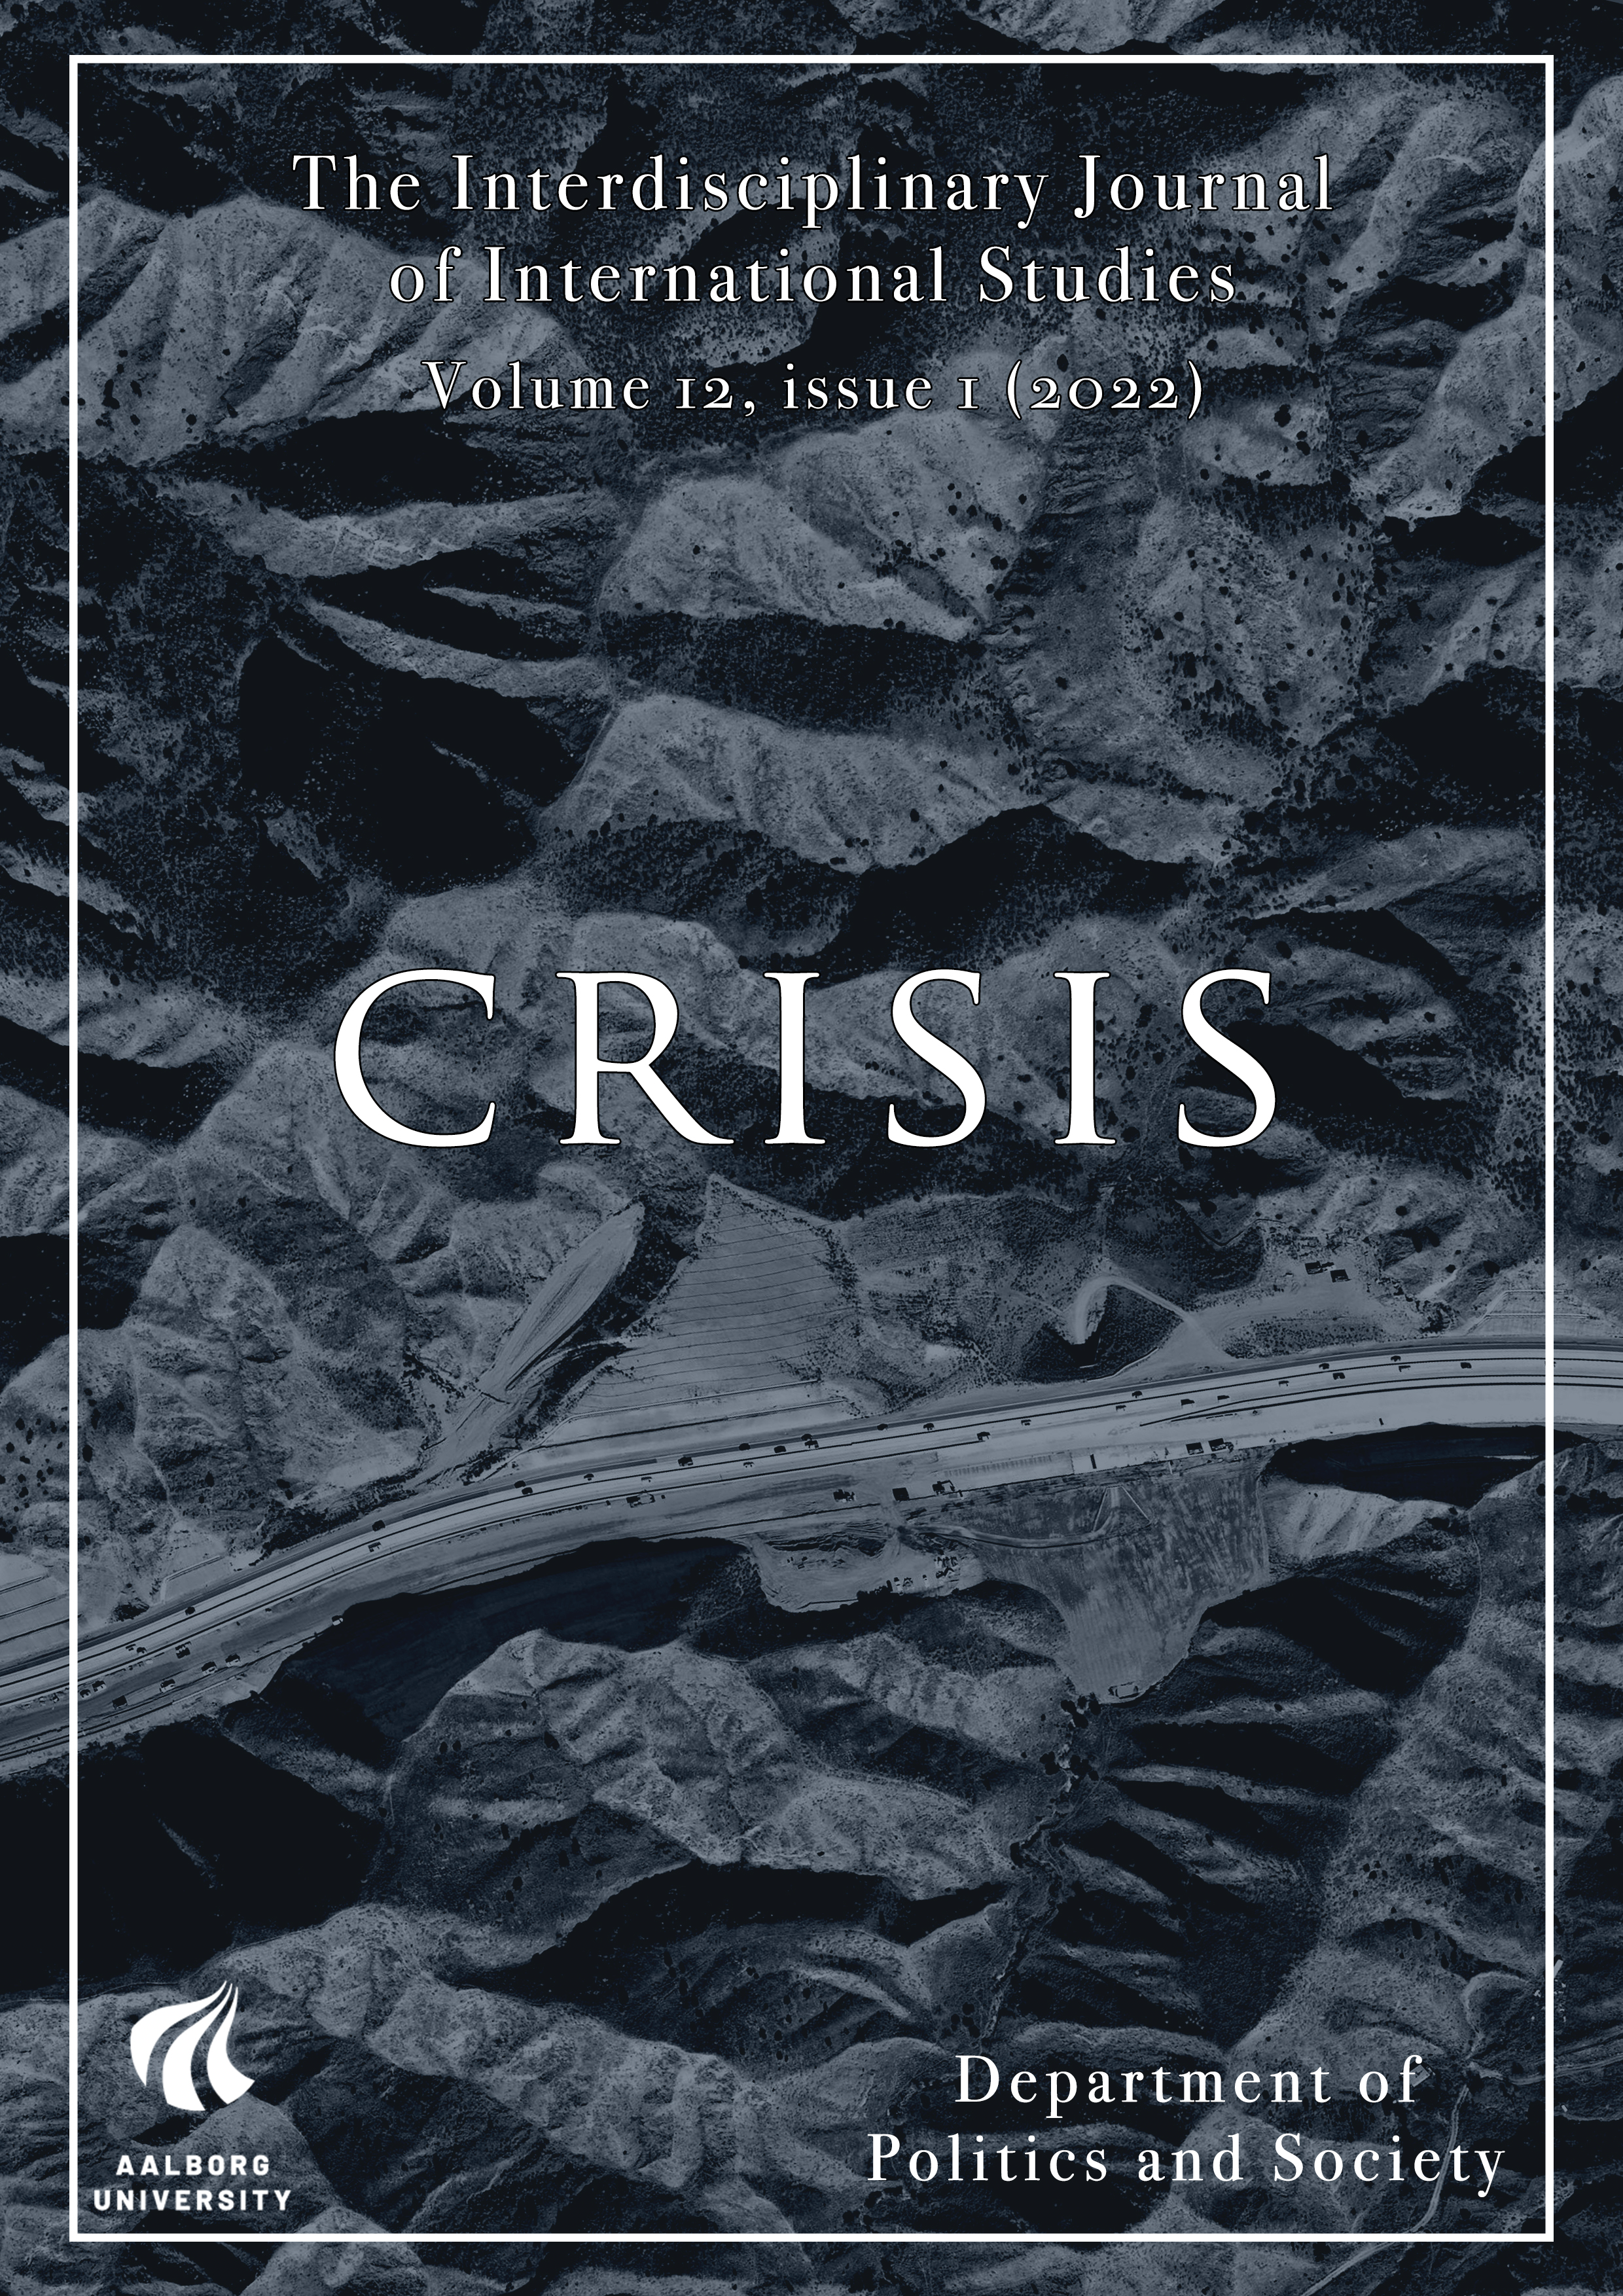 					View Vol. 12 No. 1 (2022): The Interdisciplinary Journal of International Studies: Crisis
				